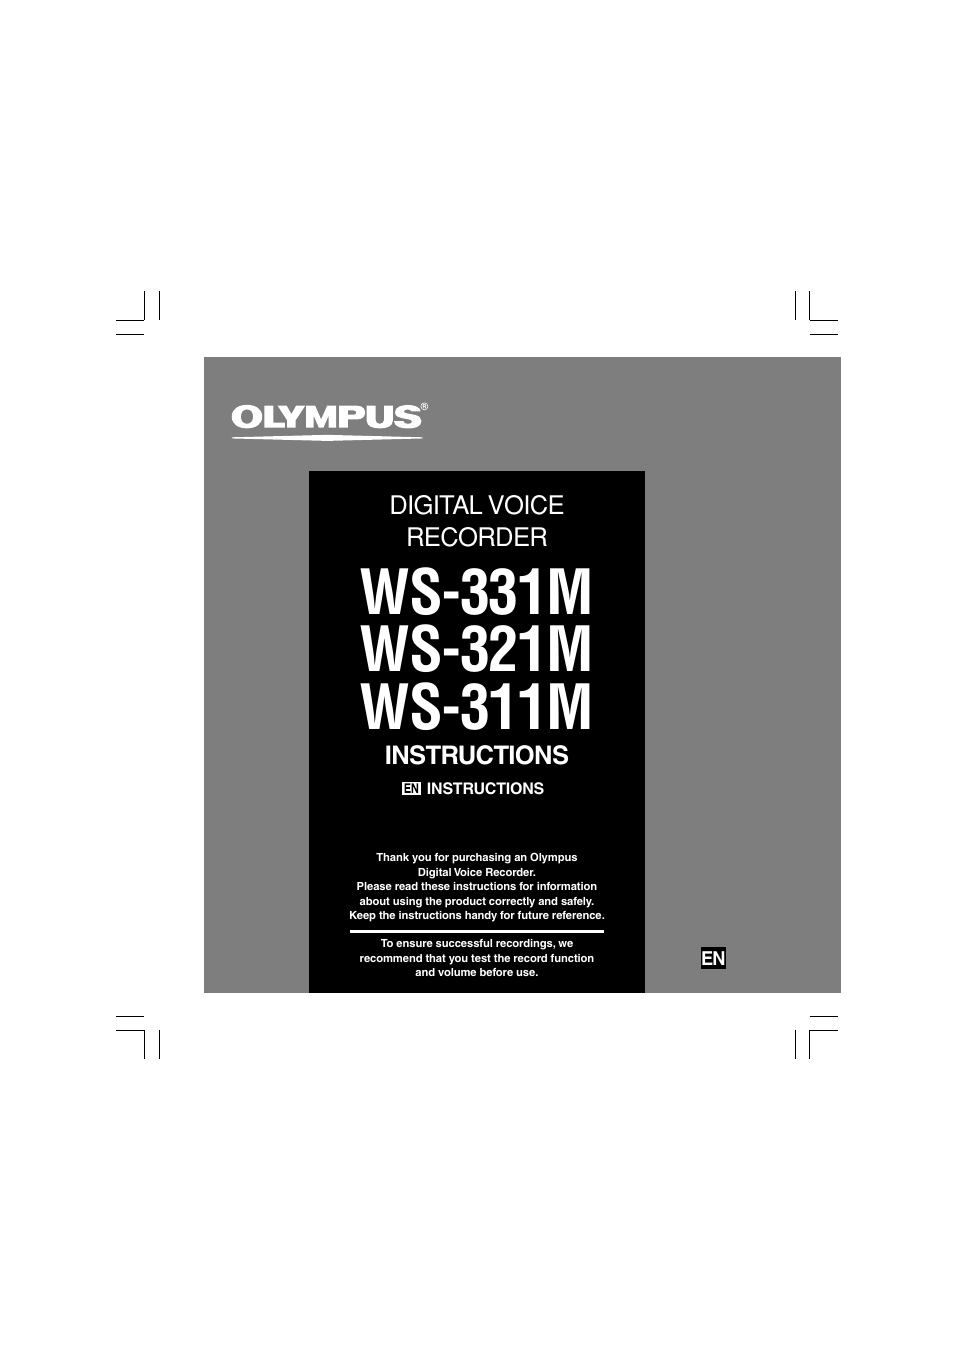 Olympus digital voice recorder user manual